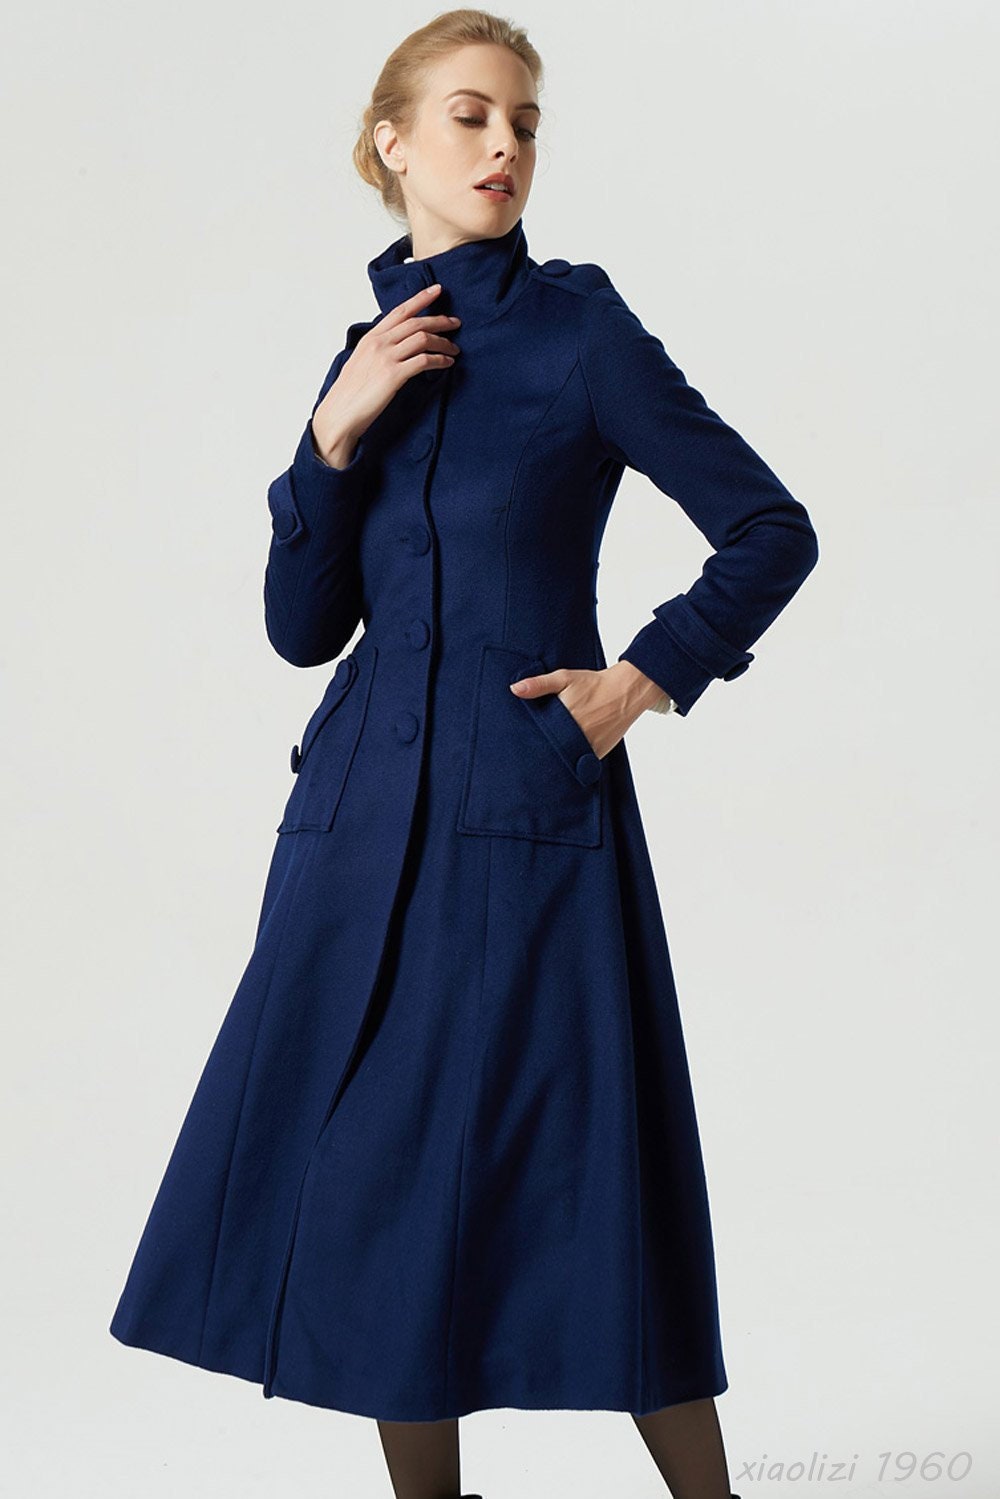 Blue coat wool coat maxi coat military coat navy coat | Etsy